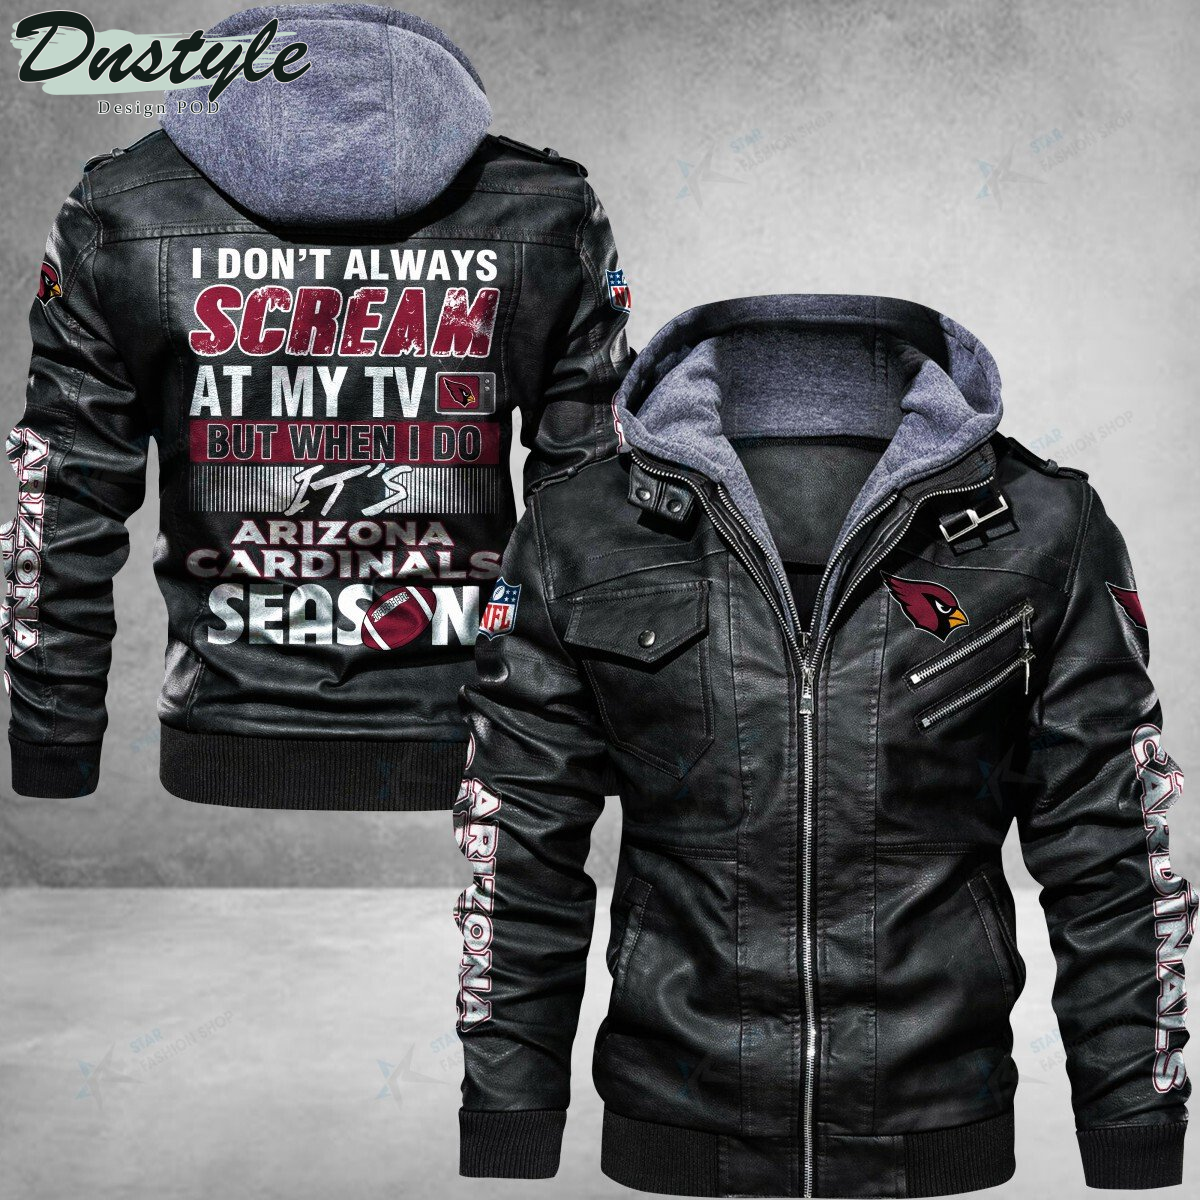 Arizona Cardinals I don’t Always Scream At My TV Leather Jacket